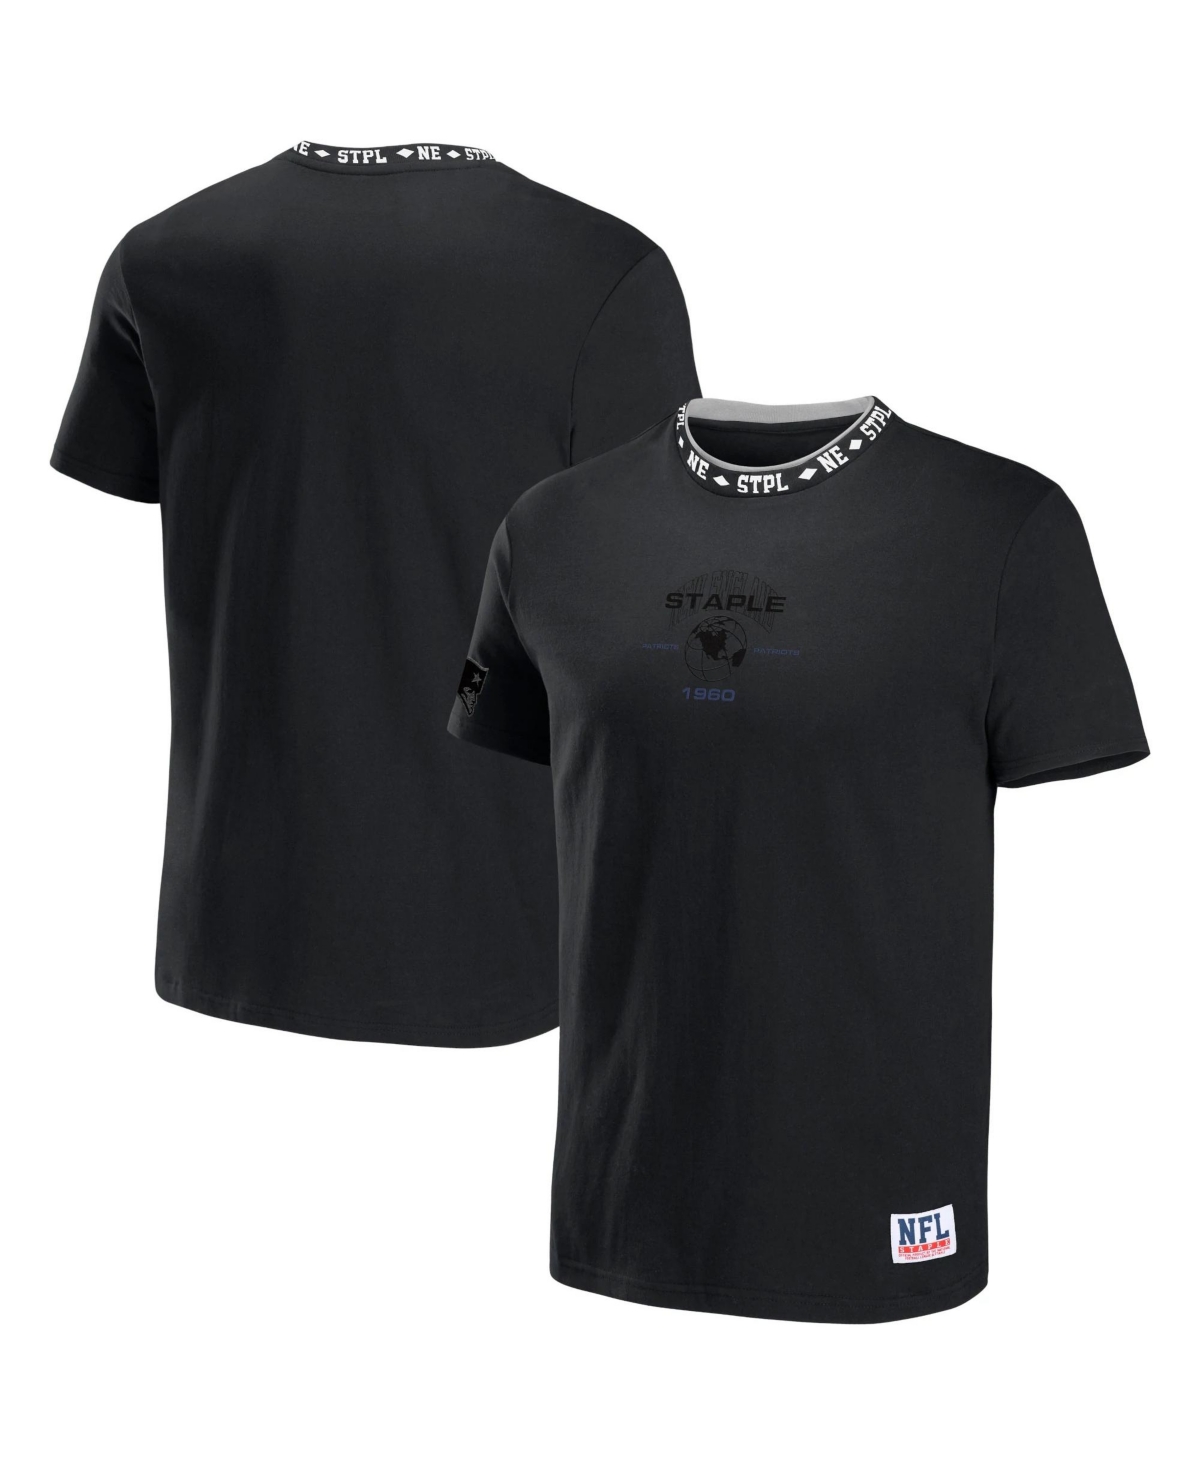 Men's Nfl X Staple Black New England Patriots Embroidered Fundementals Globe Short Sleeve T-shirt - Black